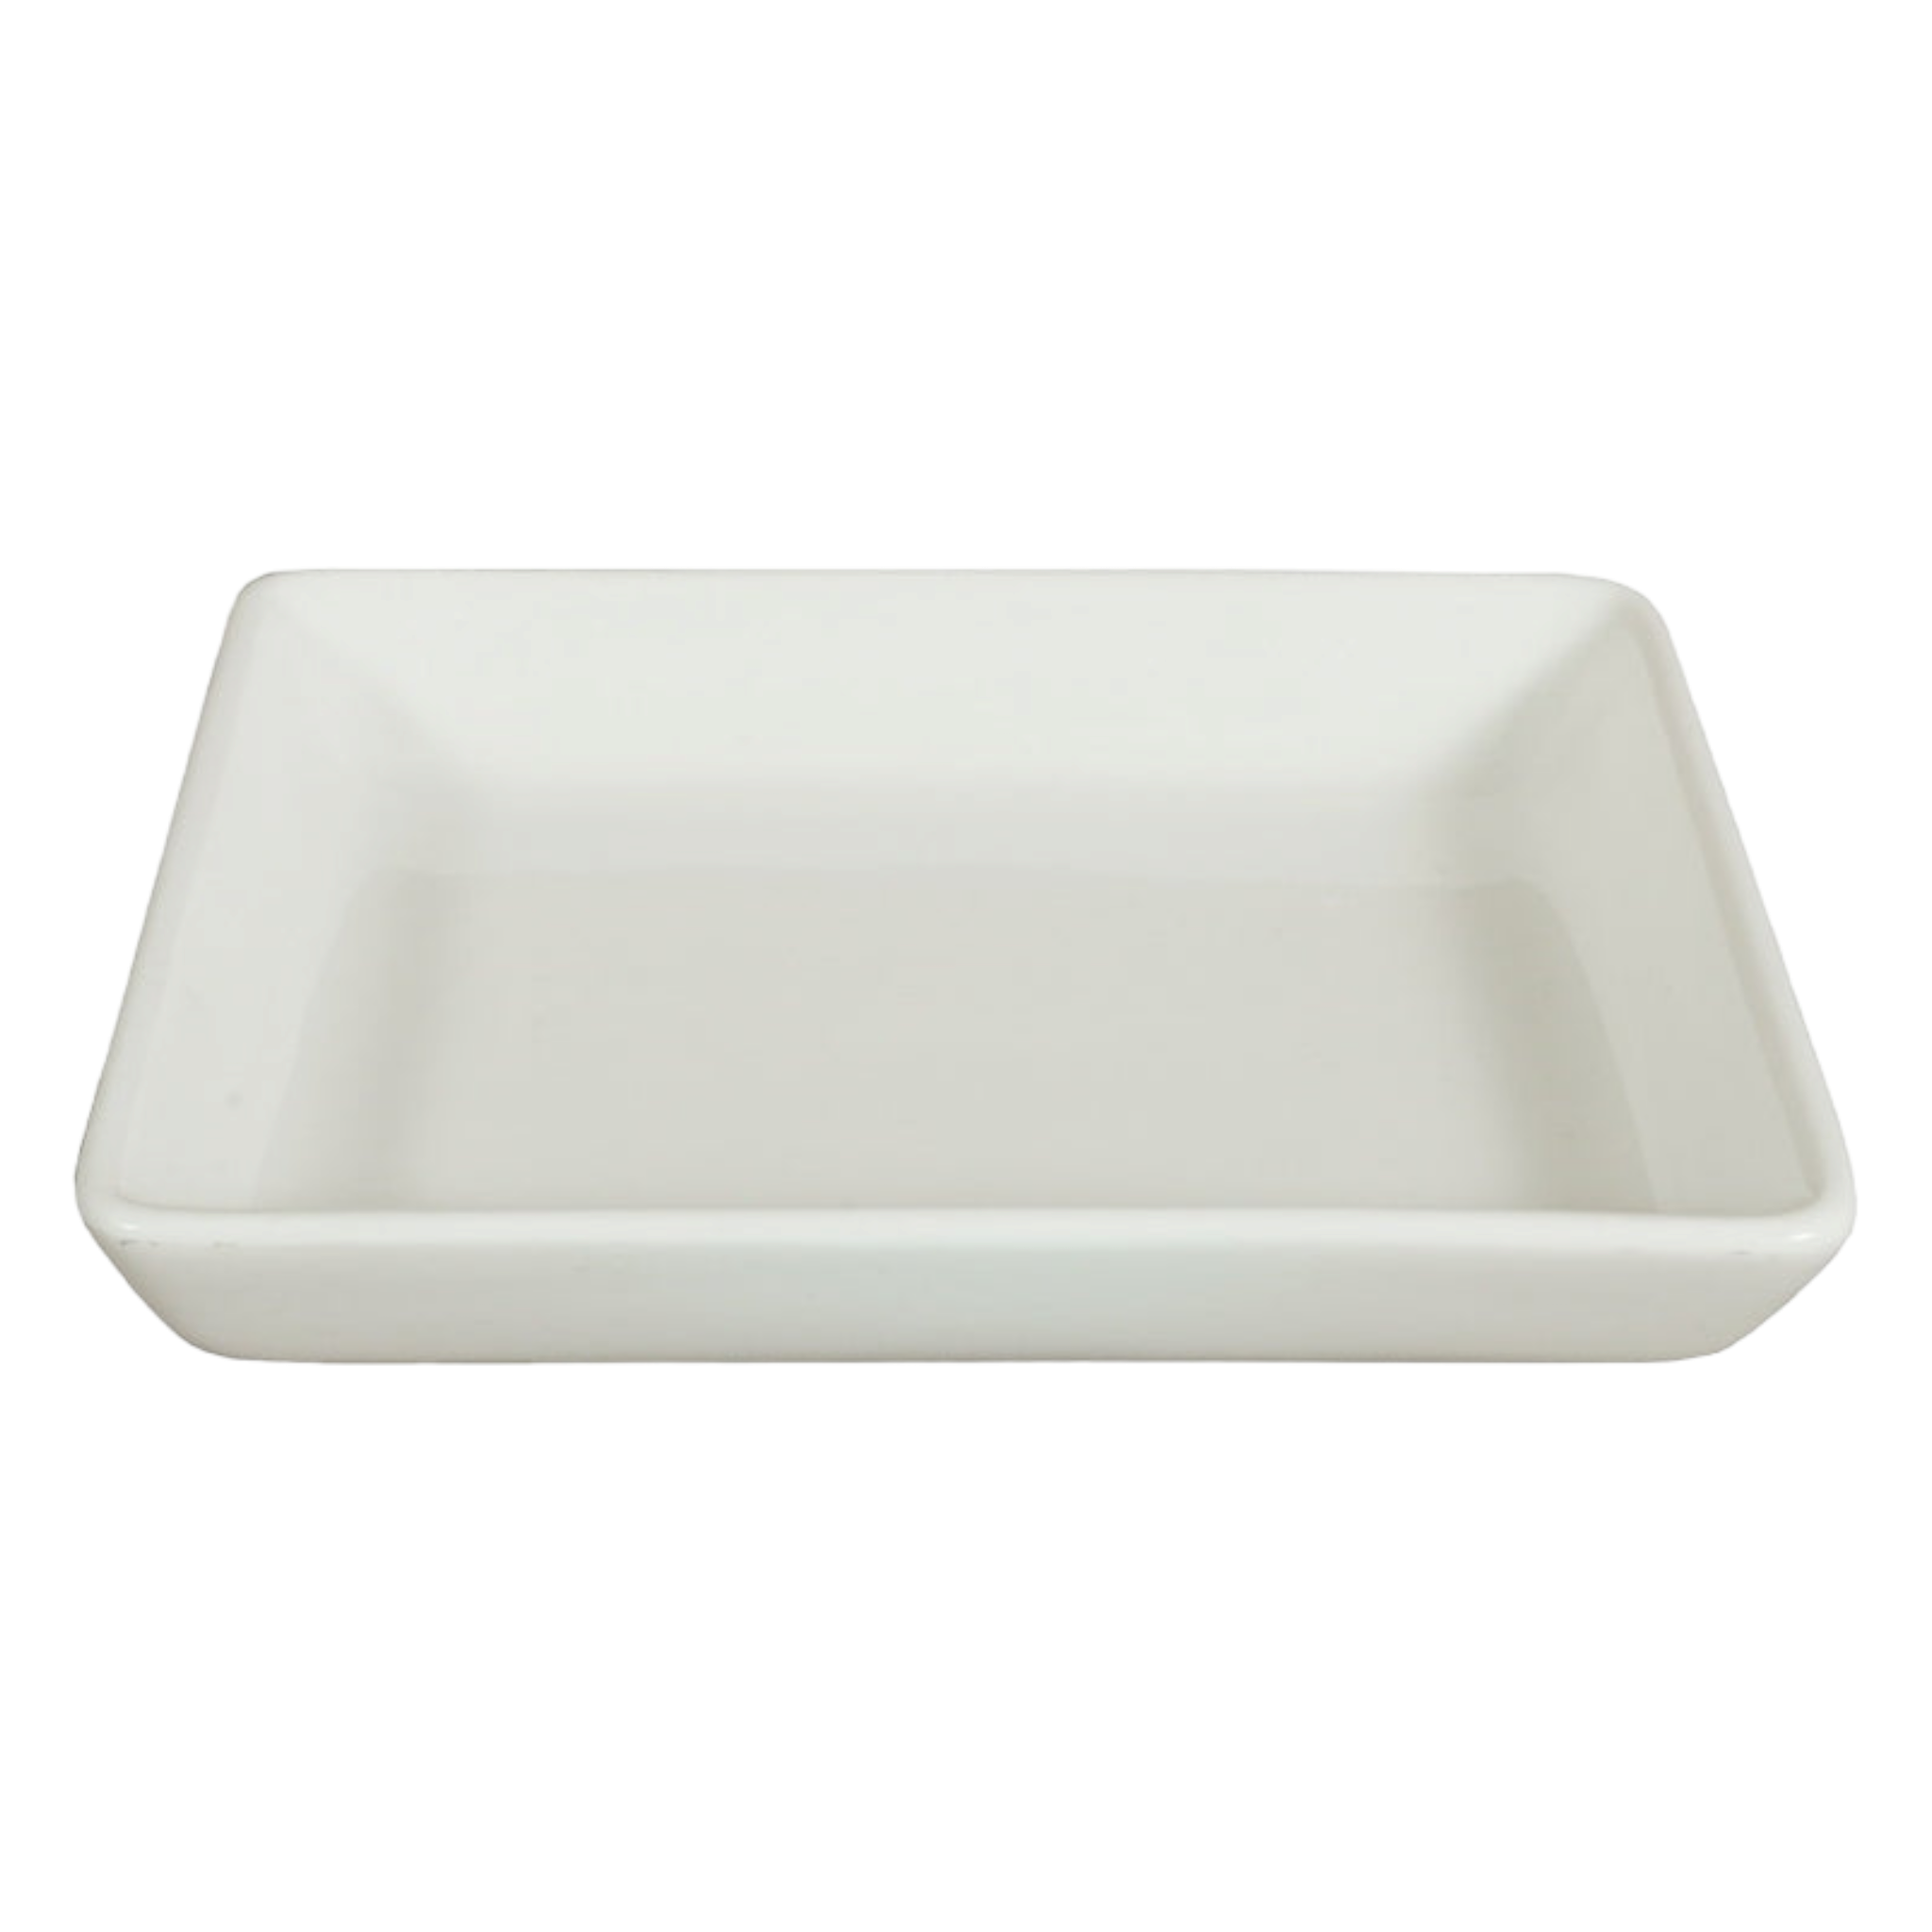 Ceramic Serving Platter Rectangle 14x11x2.5cm 32622